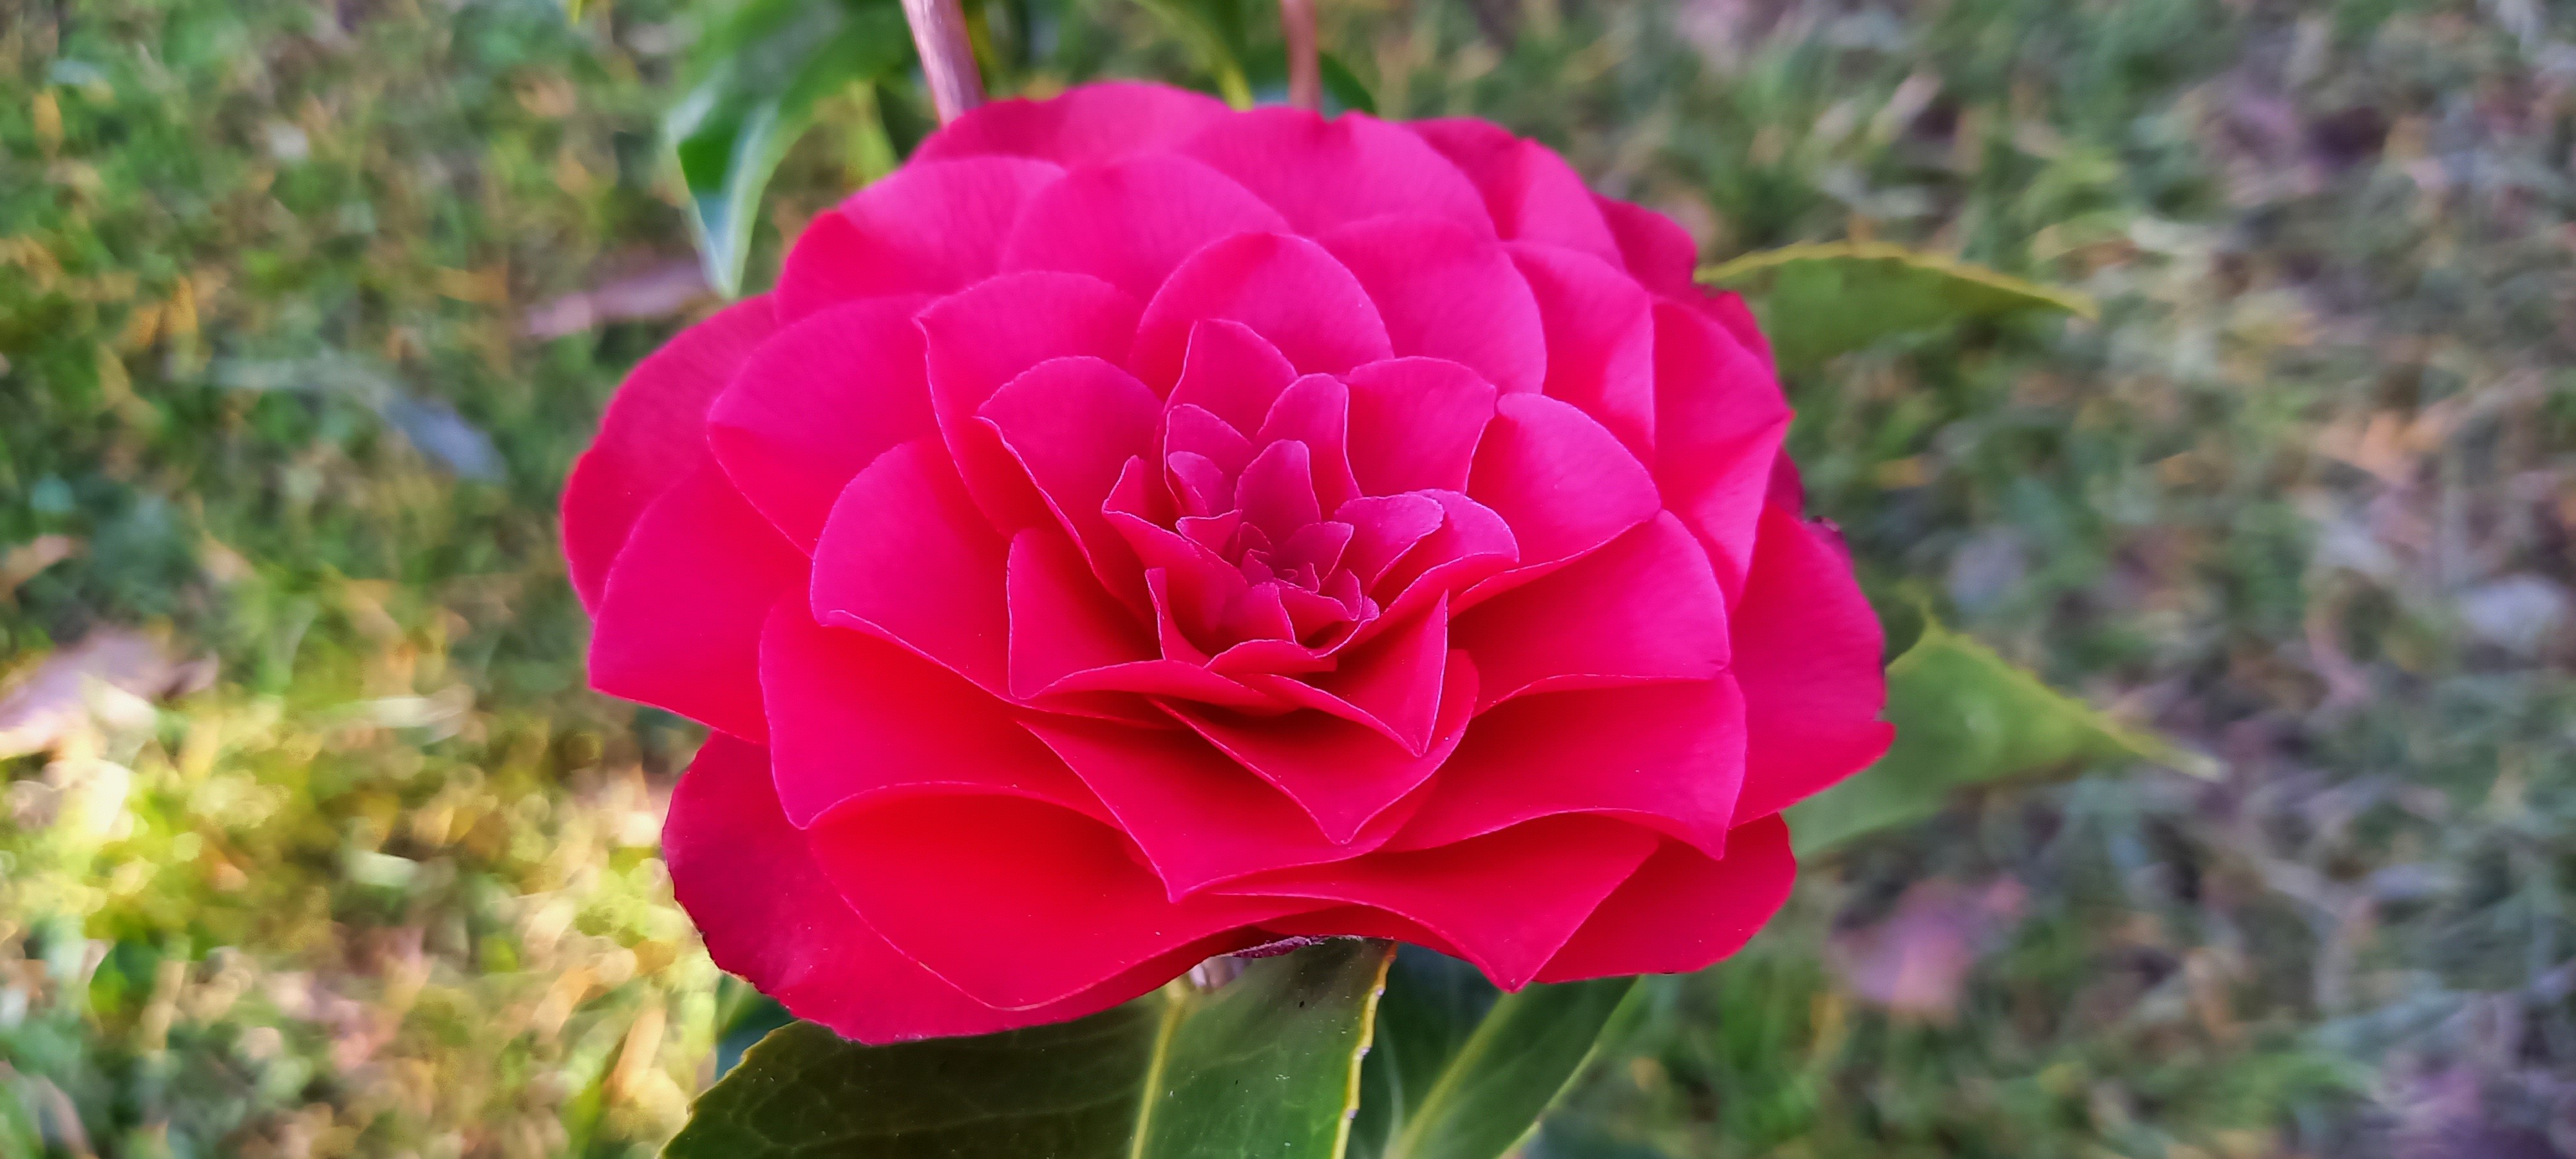 Camellia japonica 'Roger Hall'